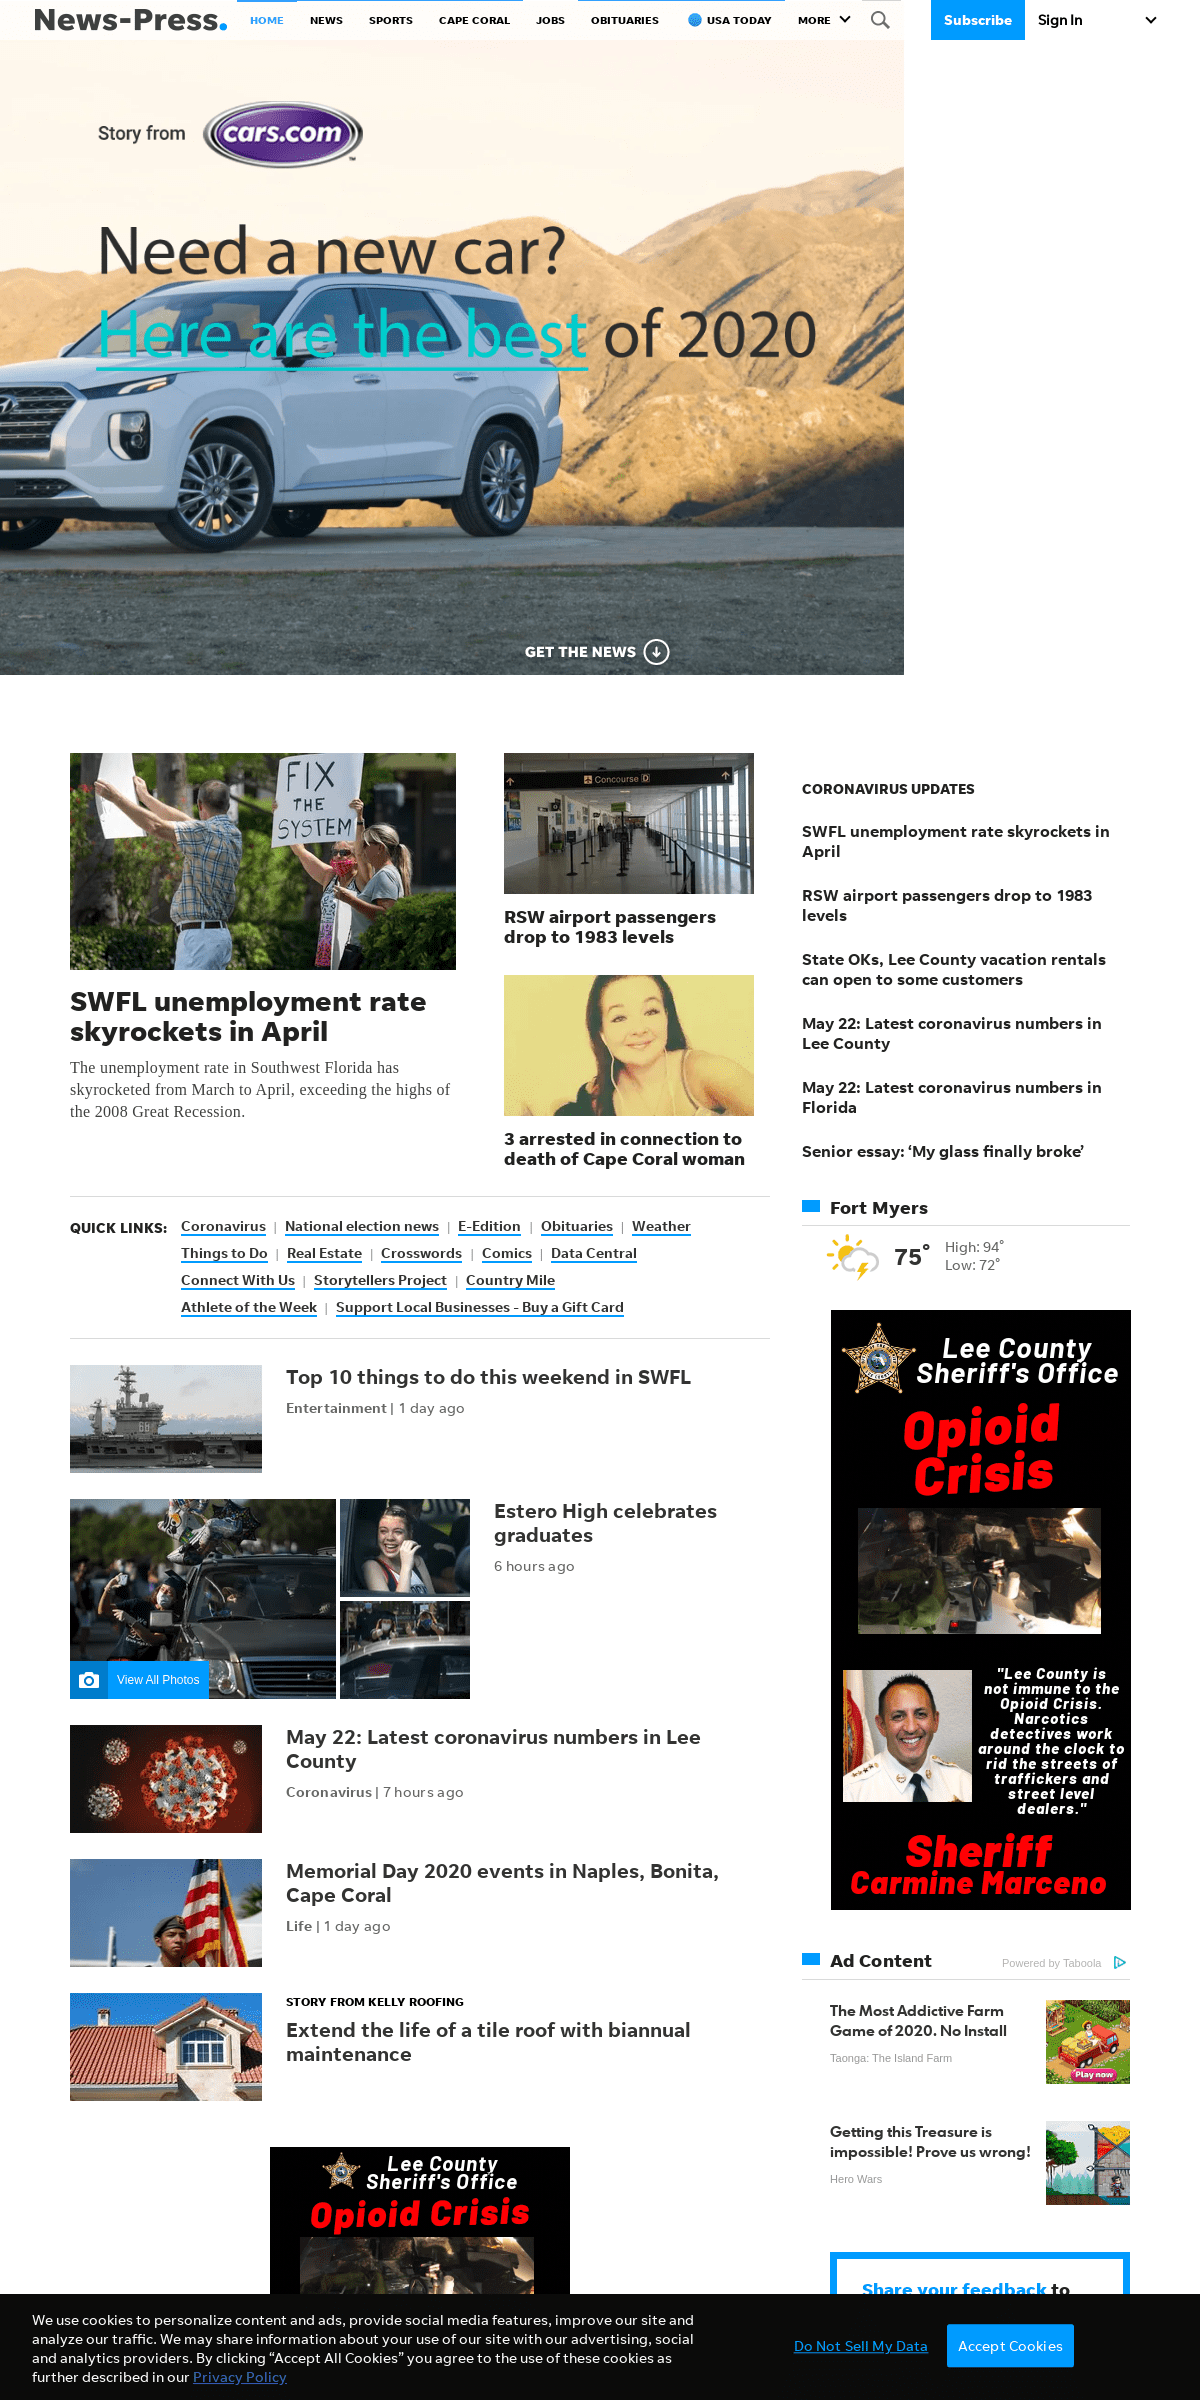 A complete backup of news-press.com